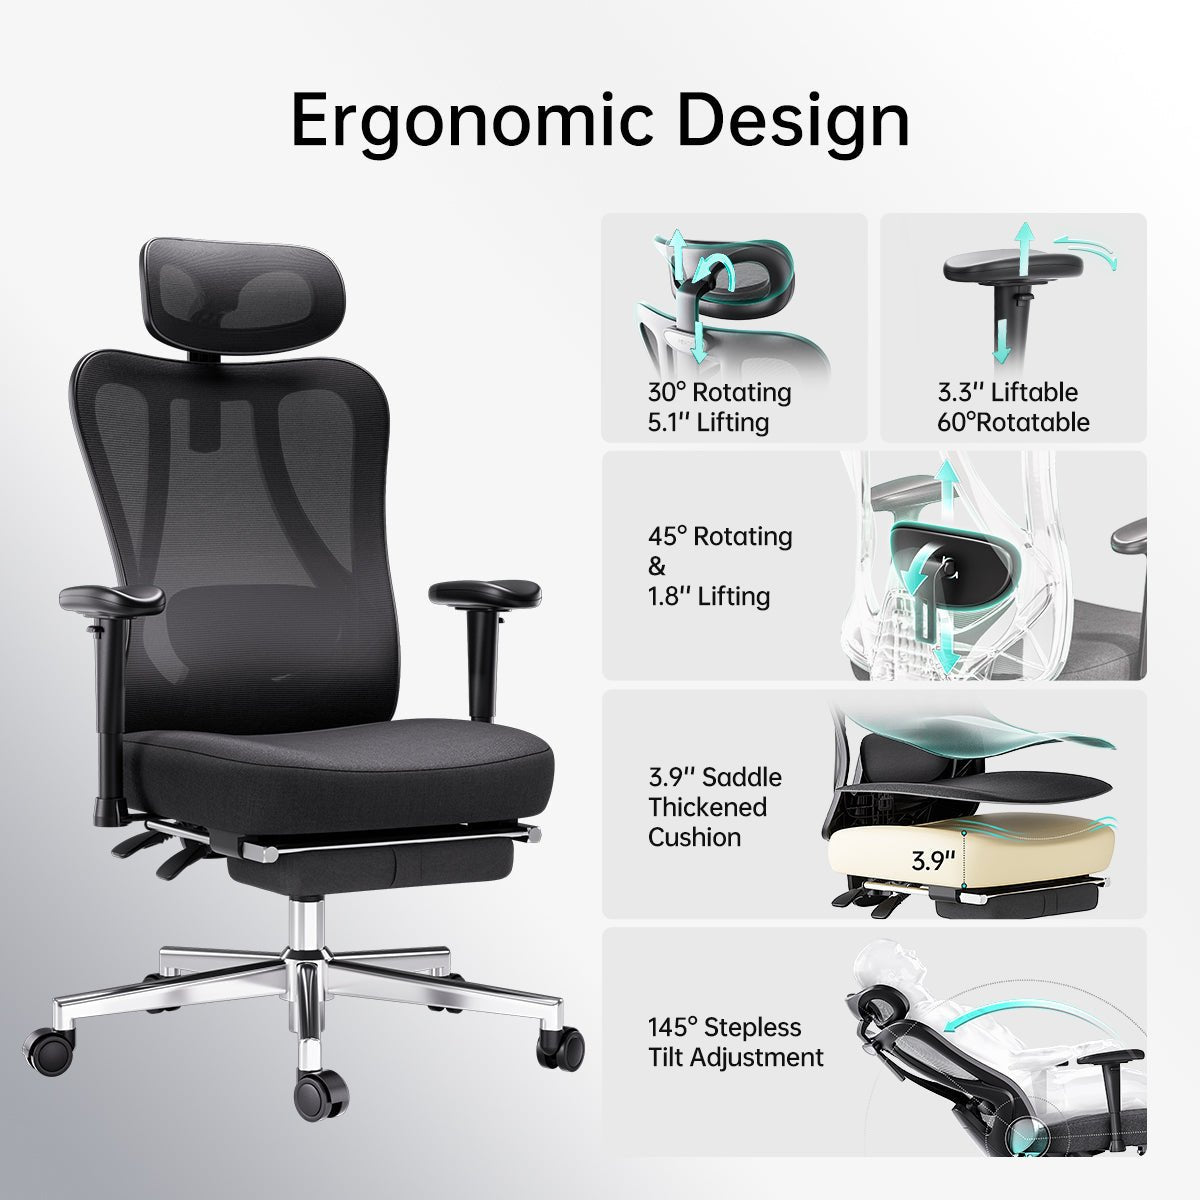 HBADA P3 Ergonomic Chair With Footrest